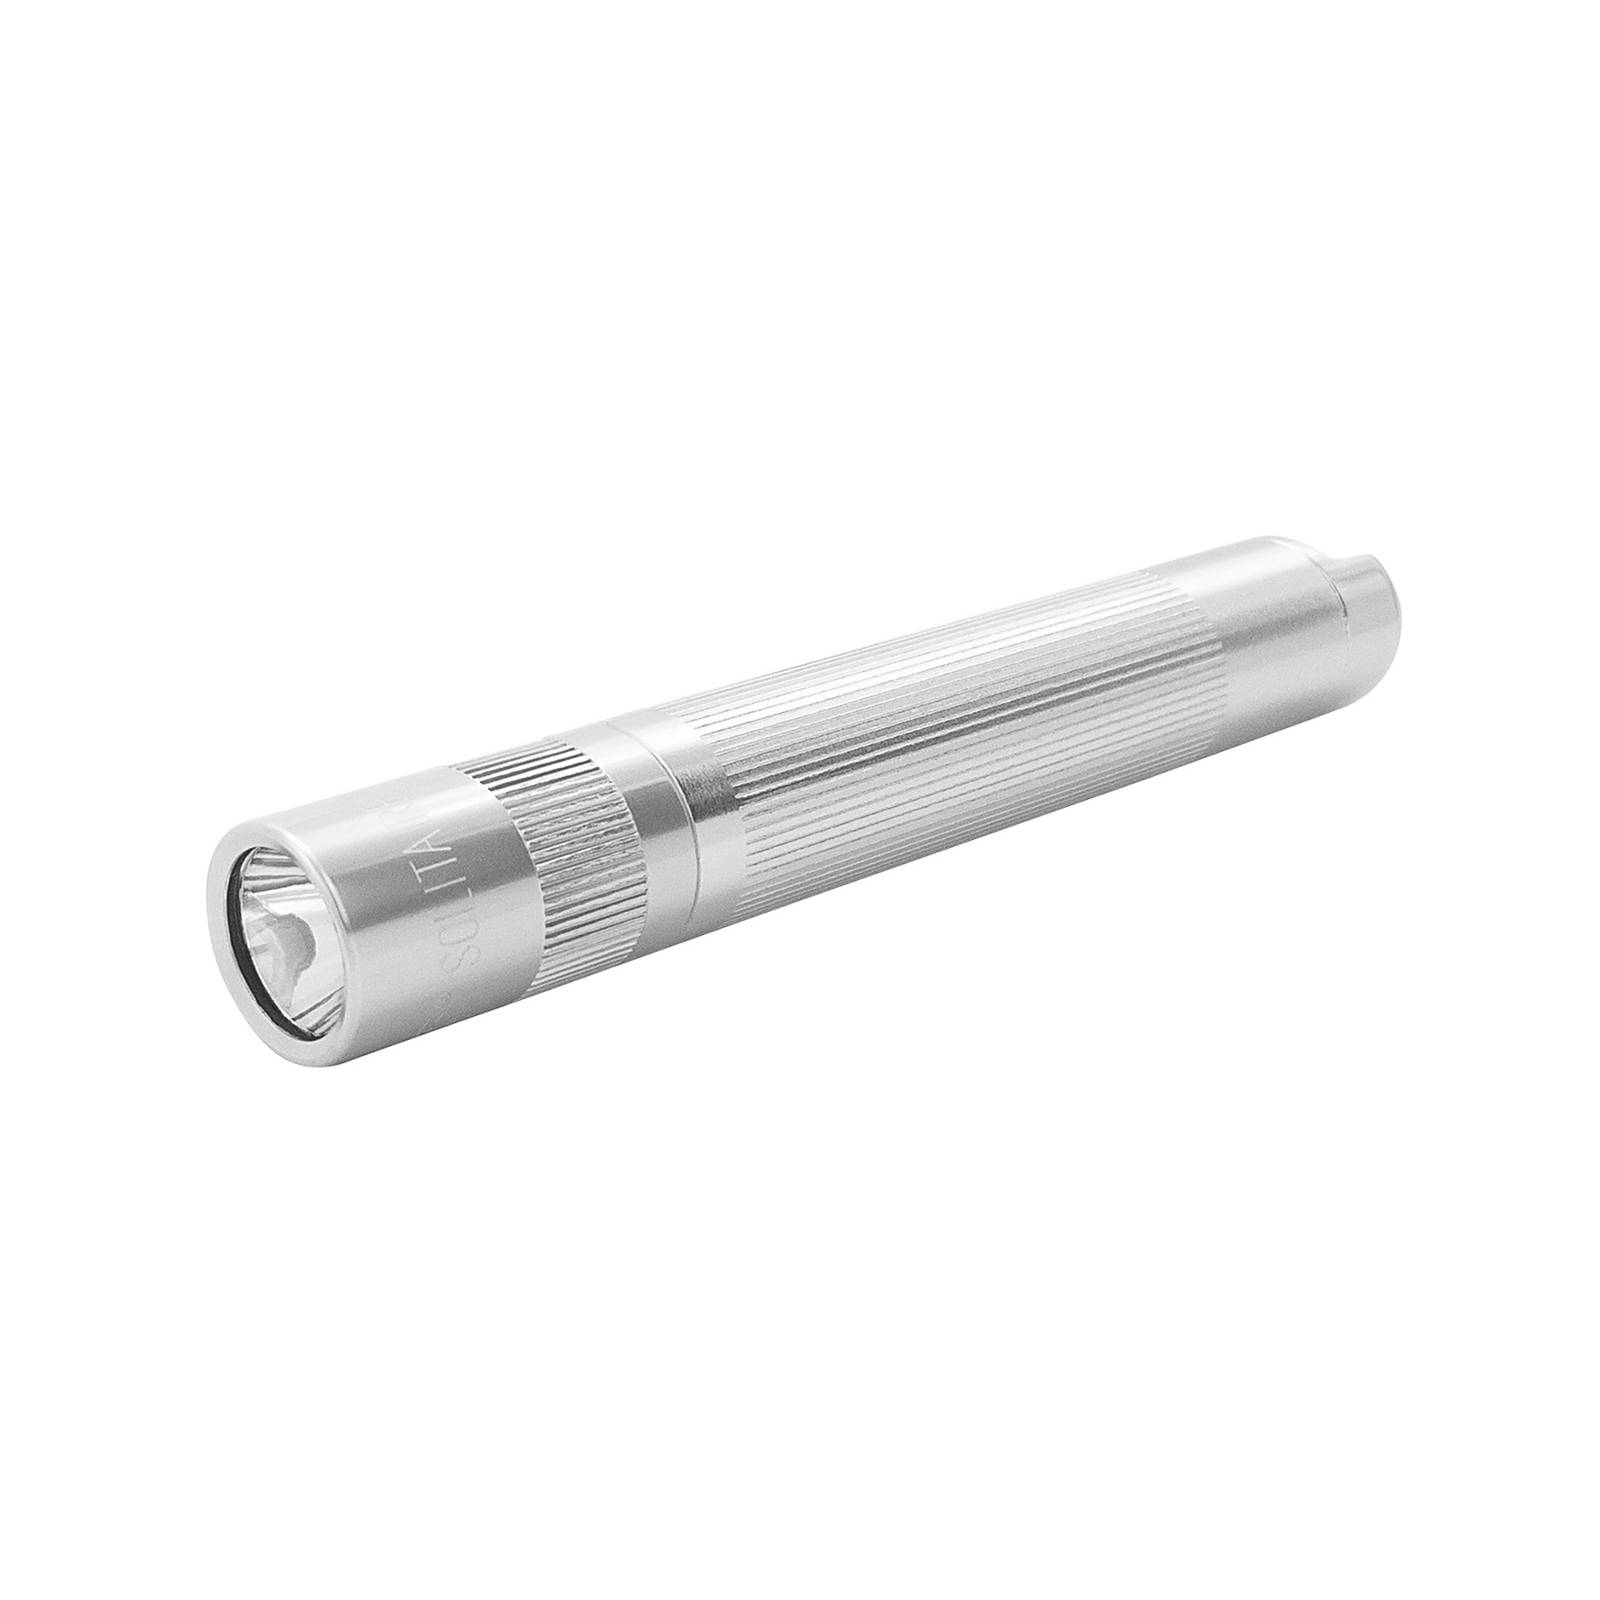 Image of Maglite lampe de poche LED Solitaire, 1-Cell AAA, argenté 